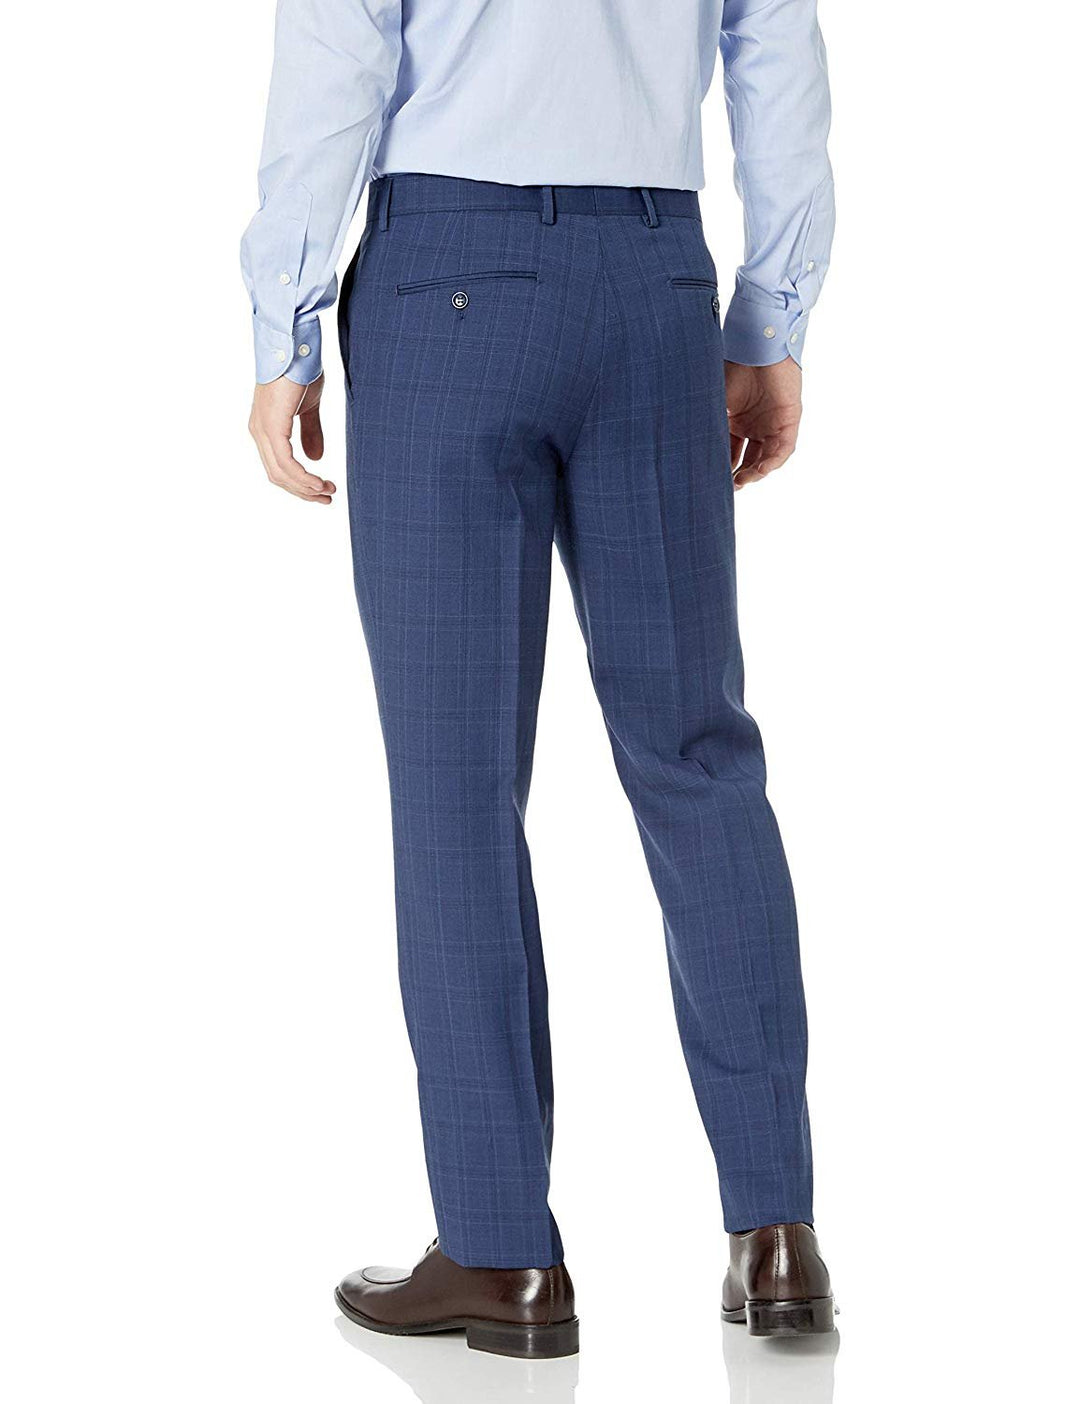 Adam Baker Men's 100% Wool Portly Fit Two-Piece Solid Suit Set - Colors